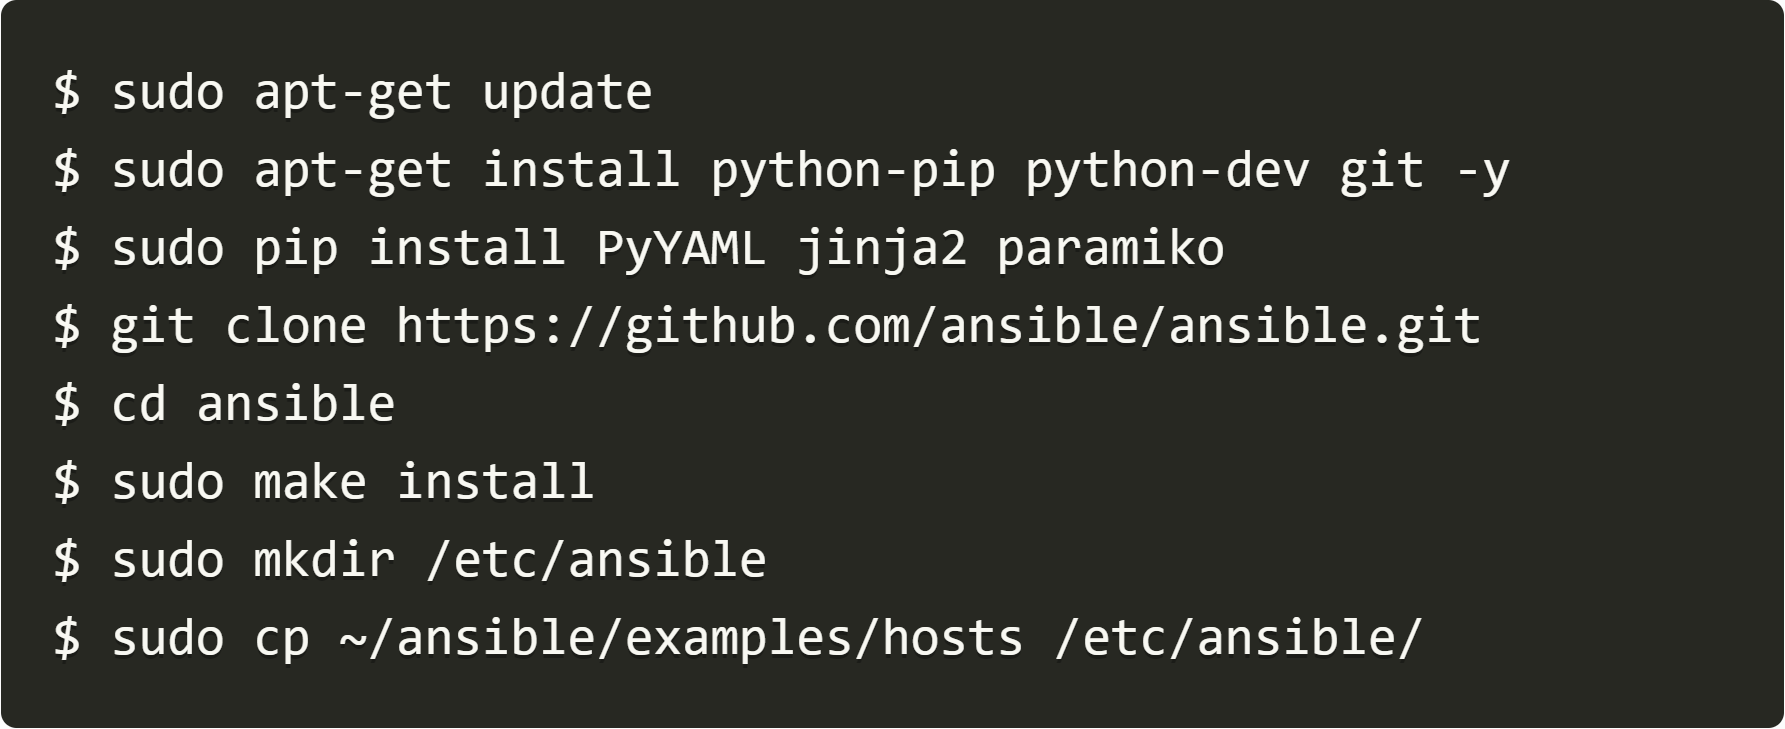 Debian install PyYaml jinja2 paramiko